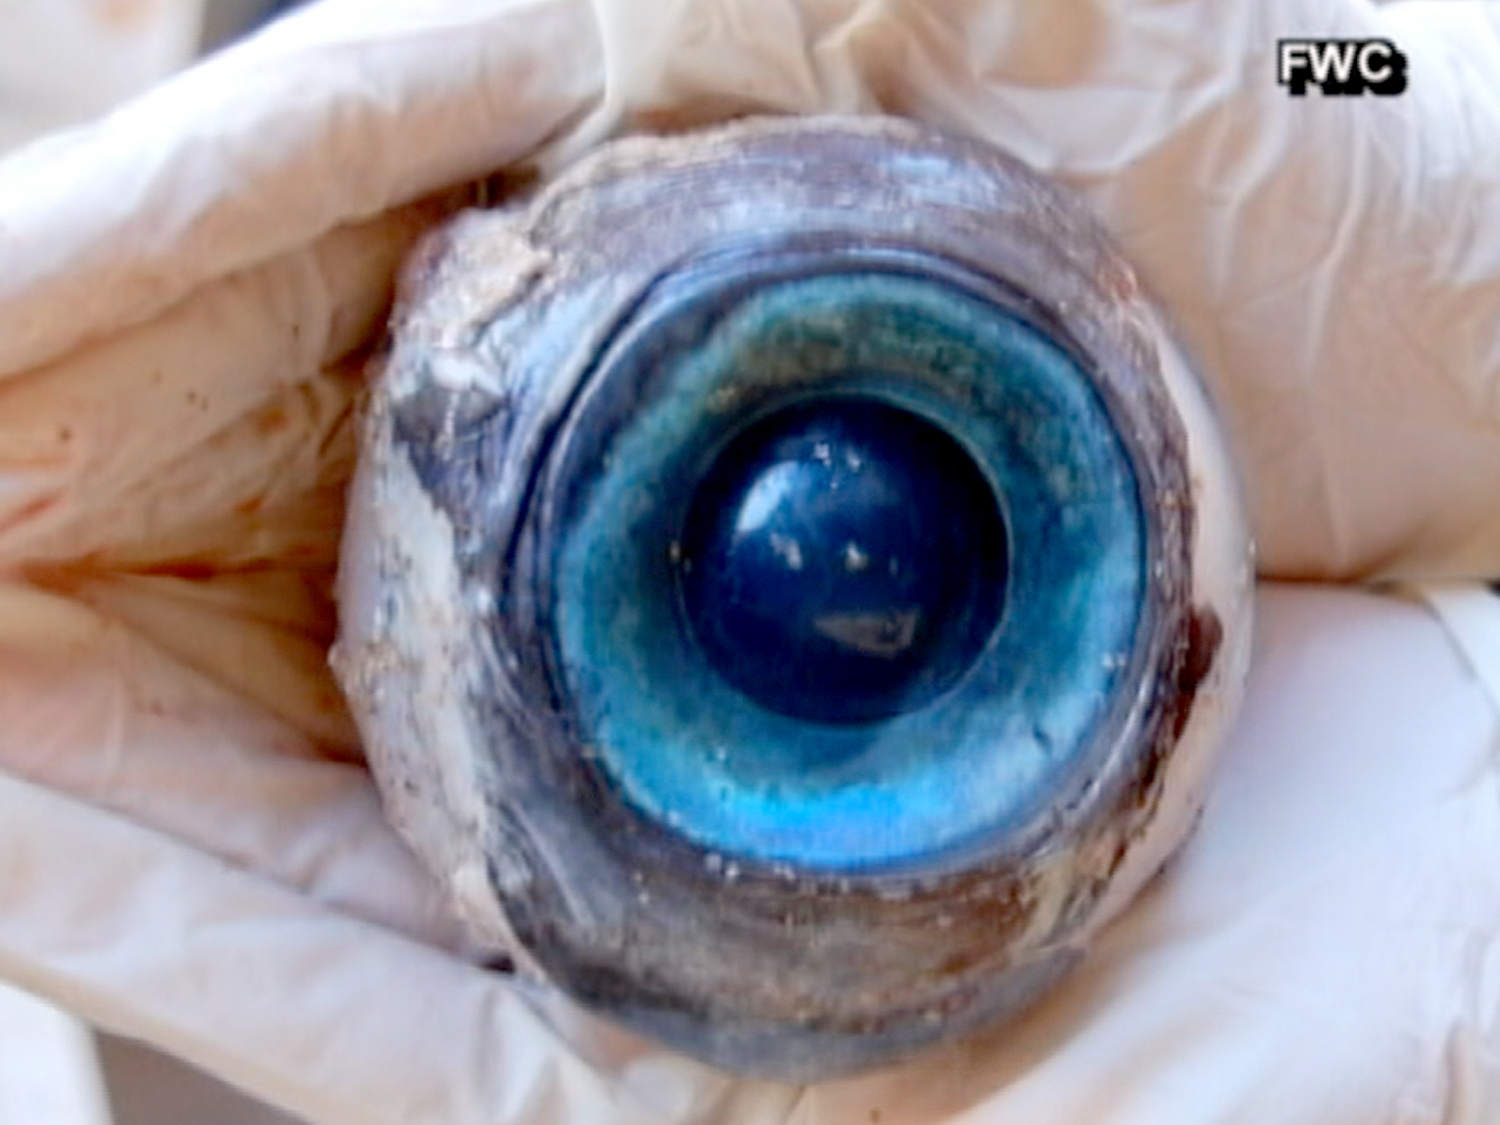 Giant eyeball found on beach, posing mystery for marine biologists